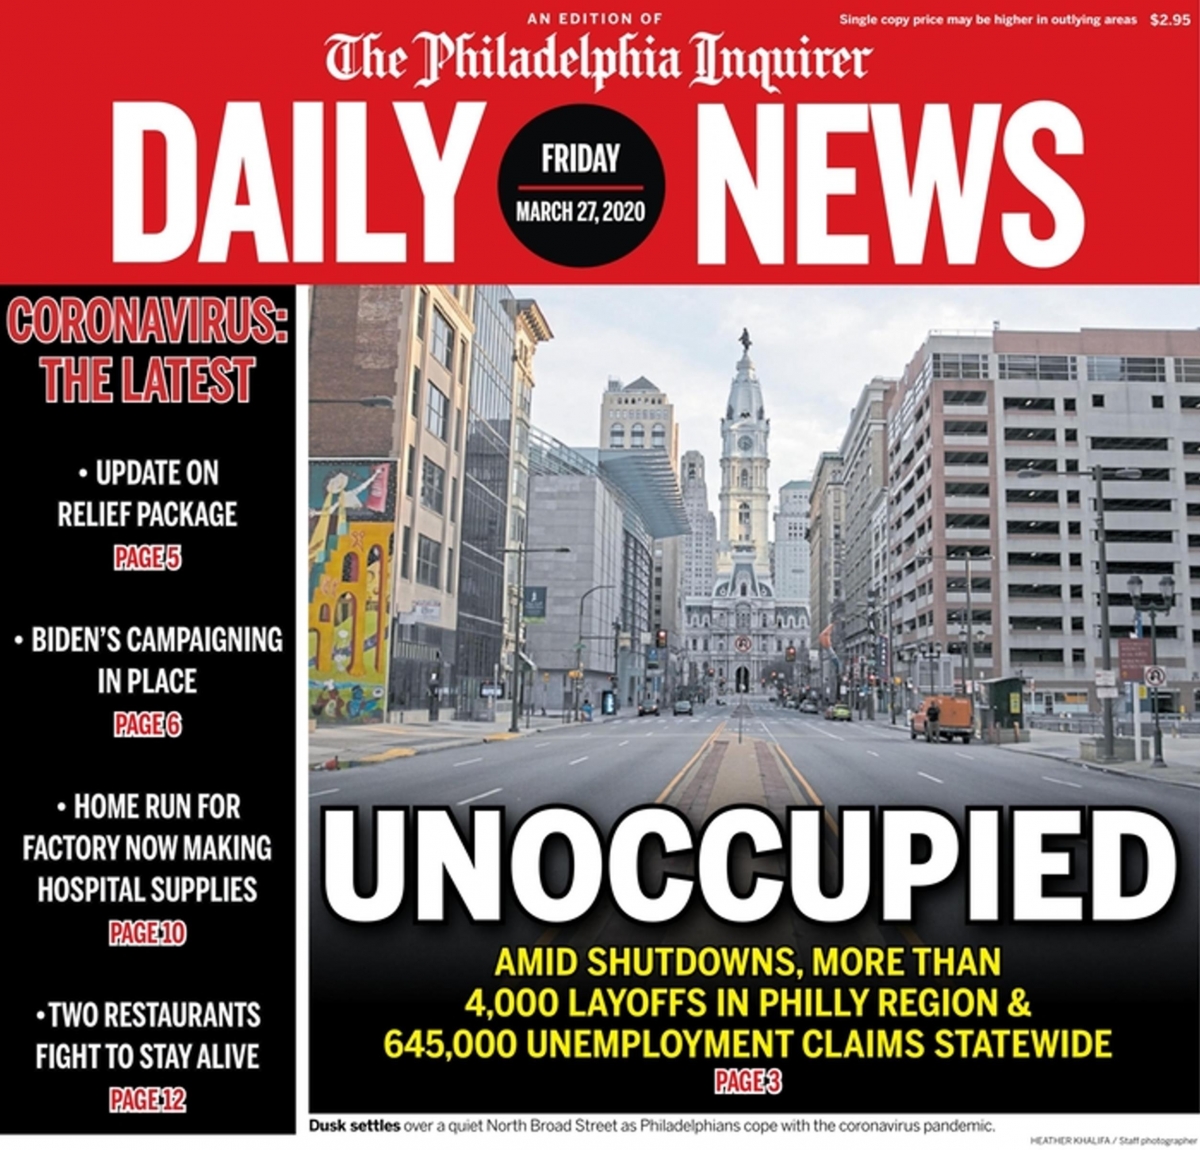 The Philadelphia Inquirer DAILY NEWS. Amid shutdowns, more than 4,000 layoffs in Philly region. (CORONAVIRUS 27-03-2020)